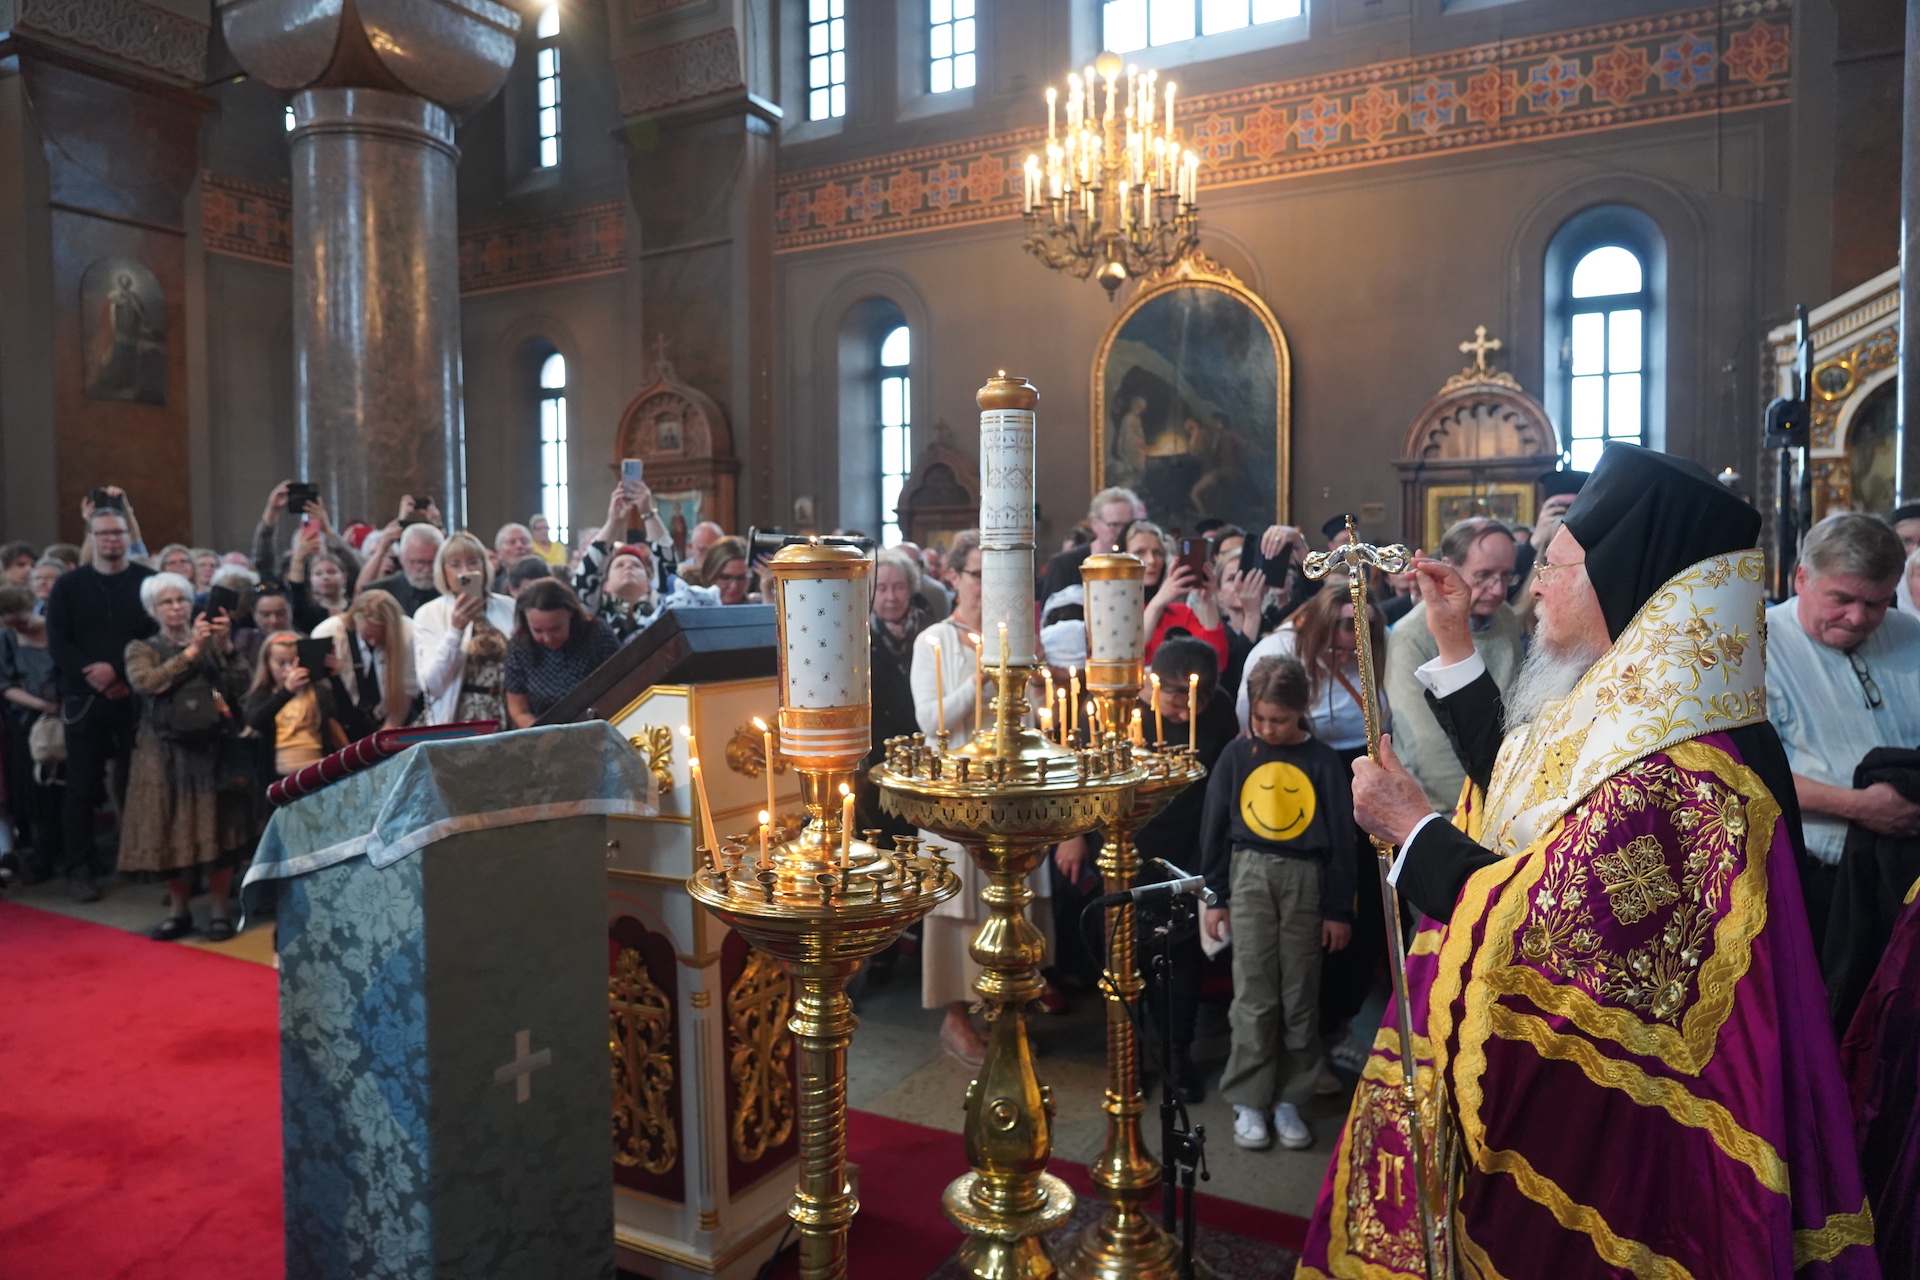 Finland Ecumenical Patriachate - Bartholomew Archbishop and Patriach - News - Ecclesia - adologala.gr (2)